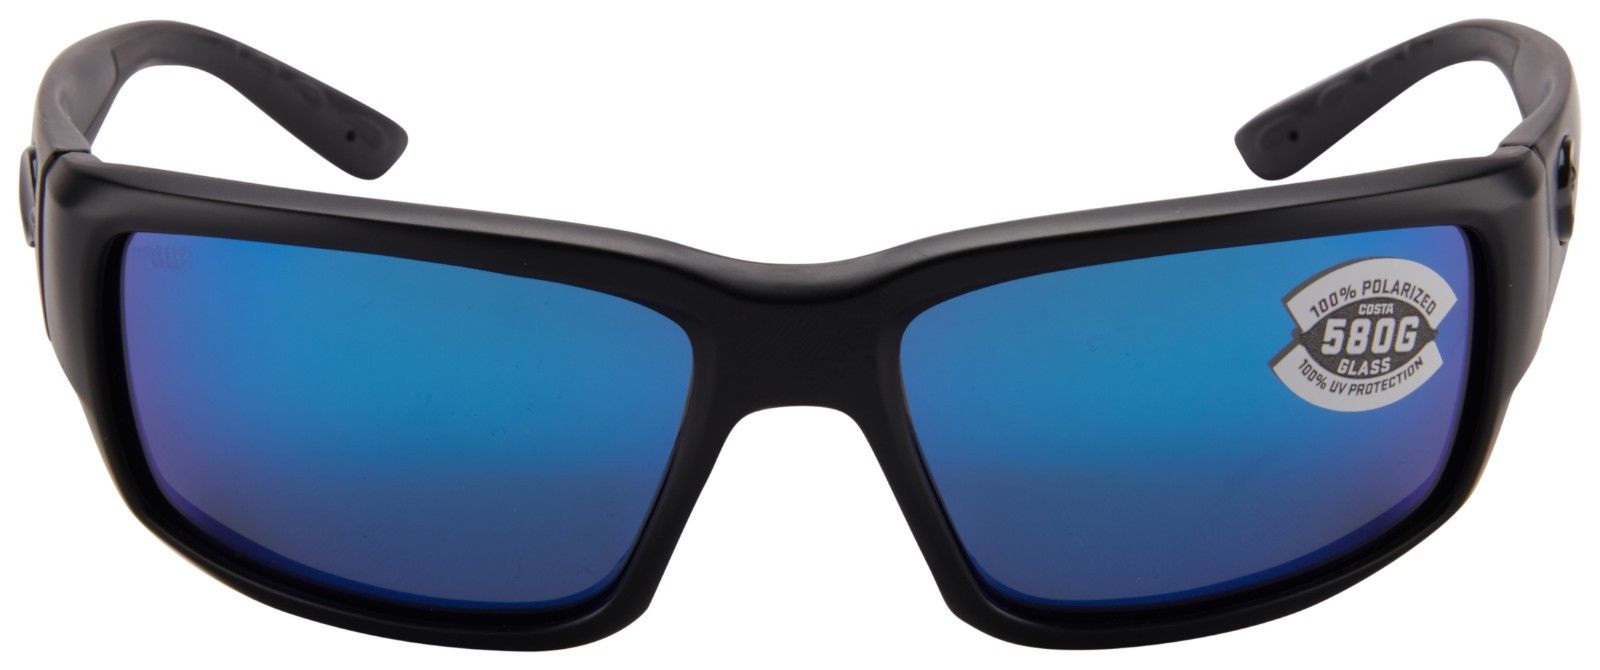 Costa Del Mar TF01OBMGLP, Polarized Fantail Blackout Blue Mirror 580G Sunglasses